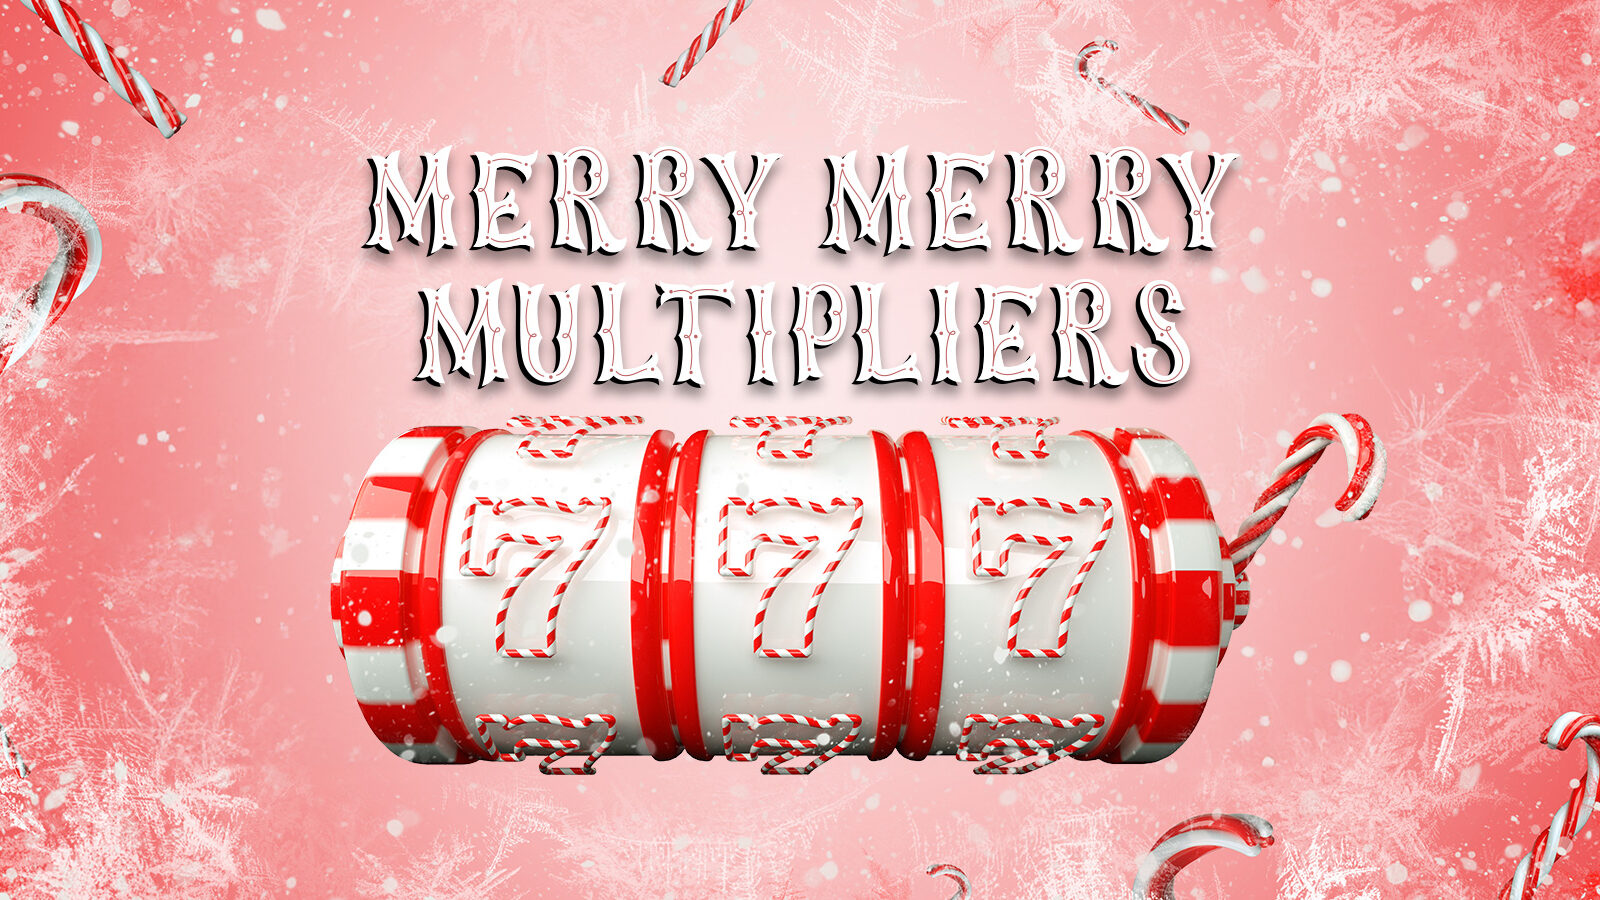 Merry Merry Multipliers